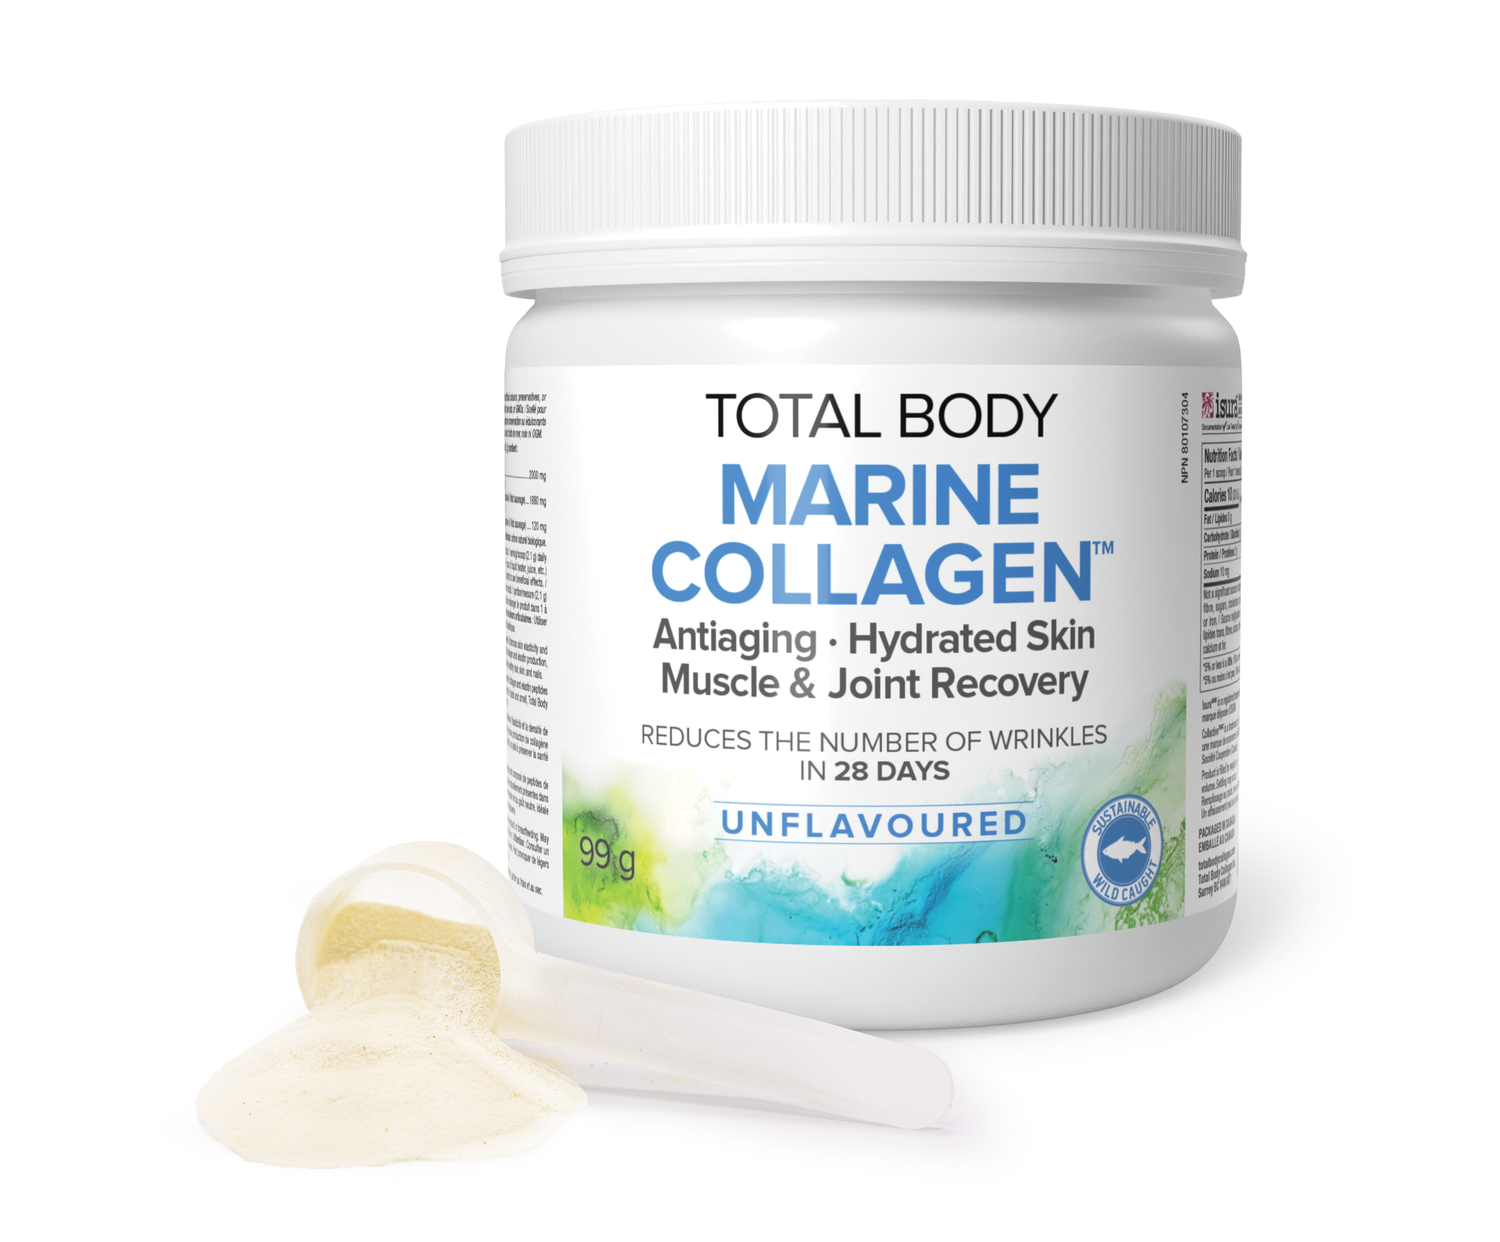 Total Body Marine Collagen, Unflavoured, Total Body Collagen|v|image|2628